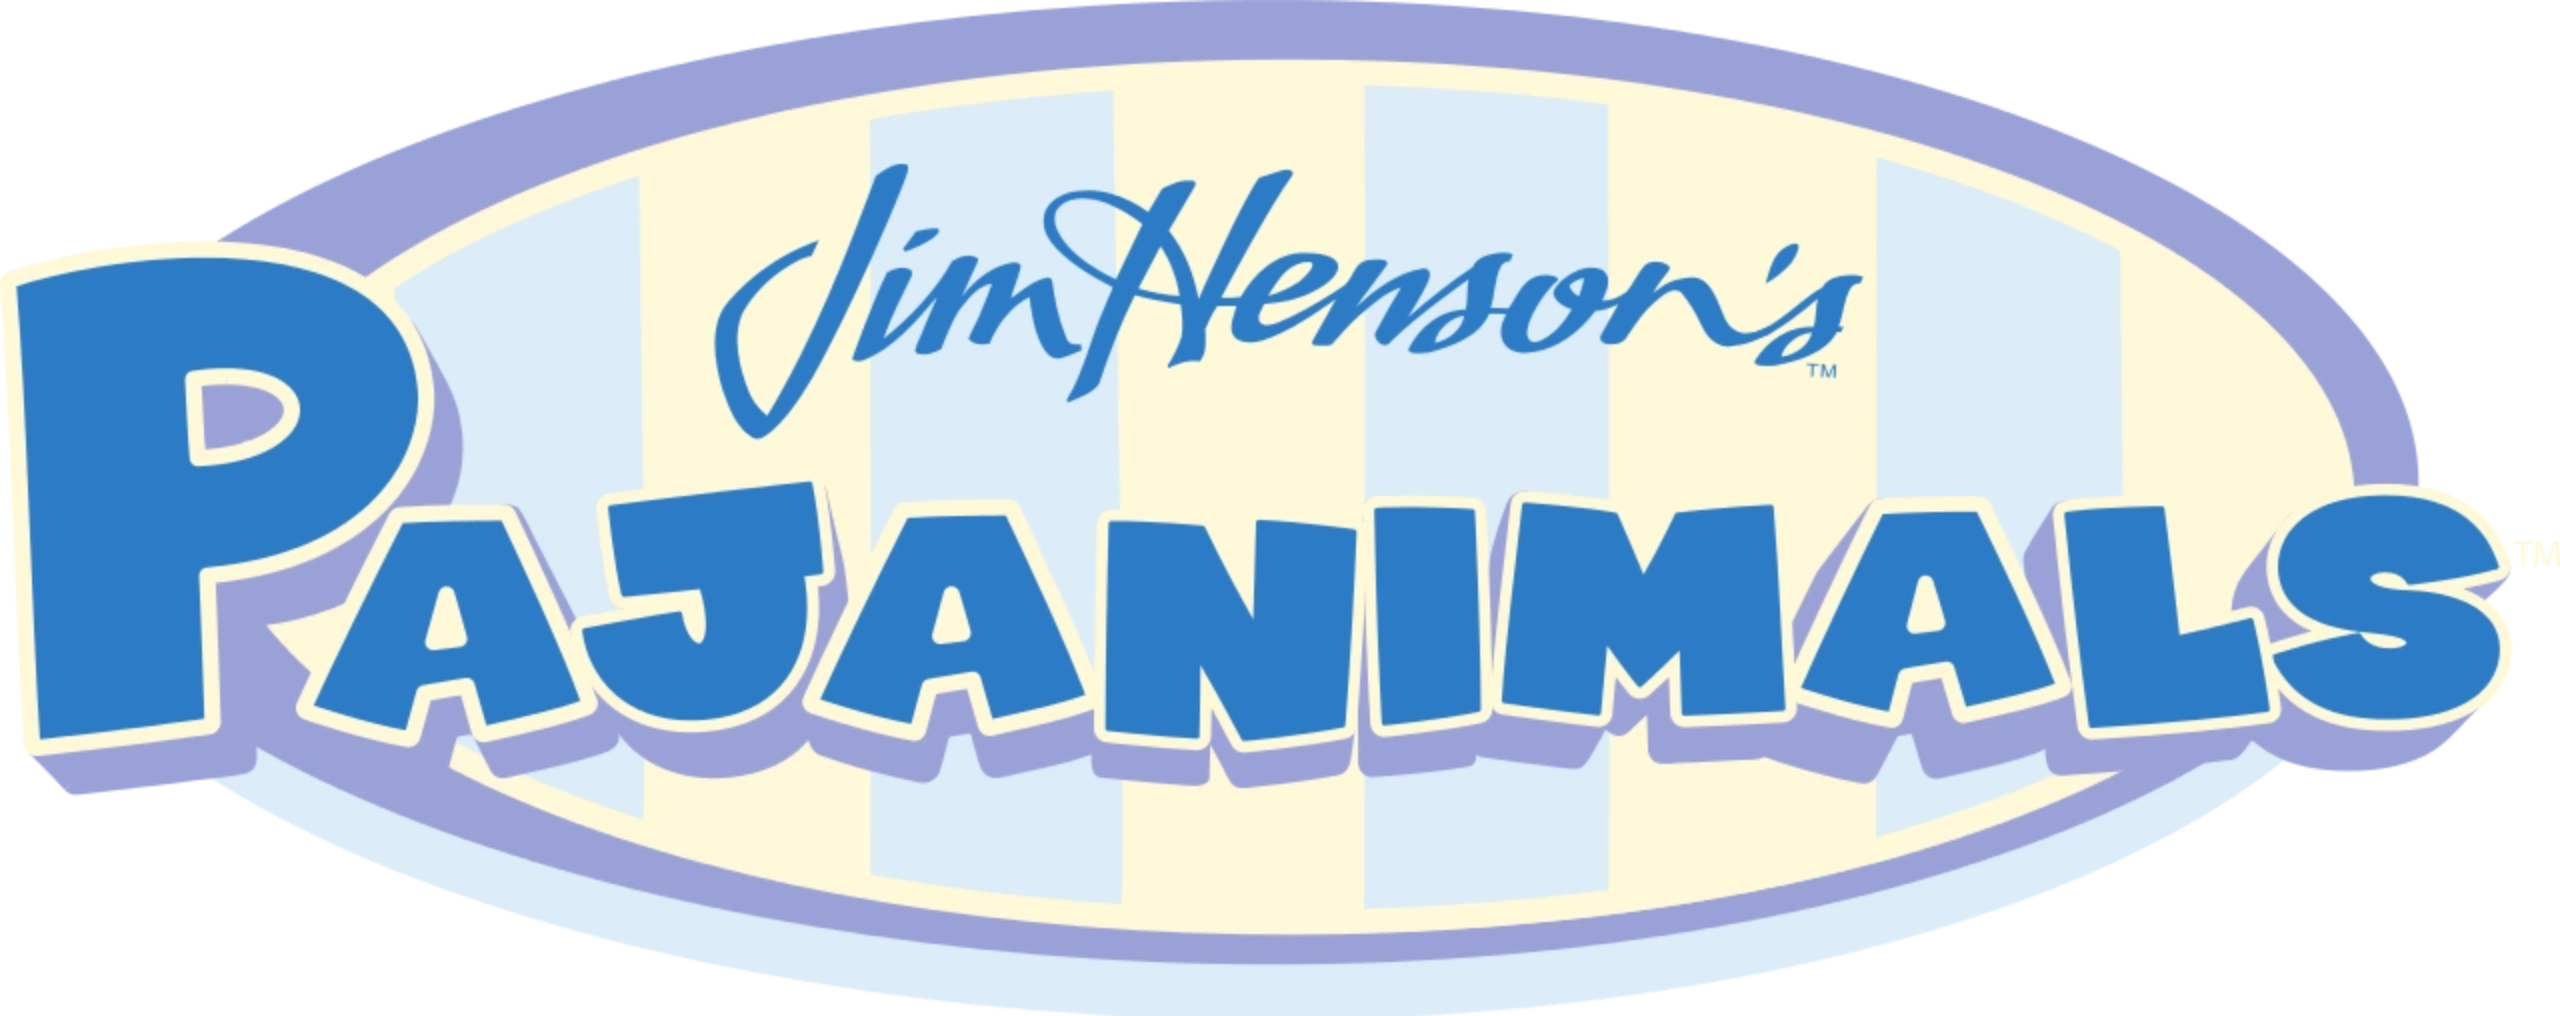 Jim Henson\'s Pajanimals Complete (1 DVD Box Set)